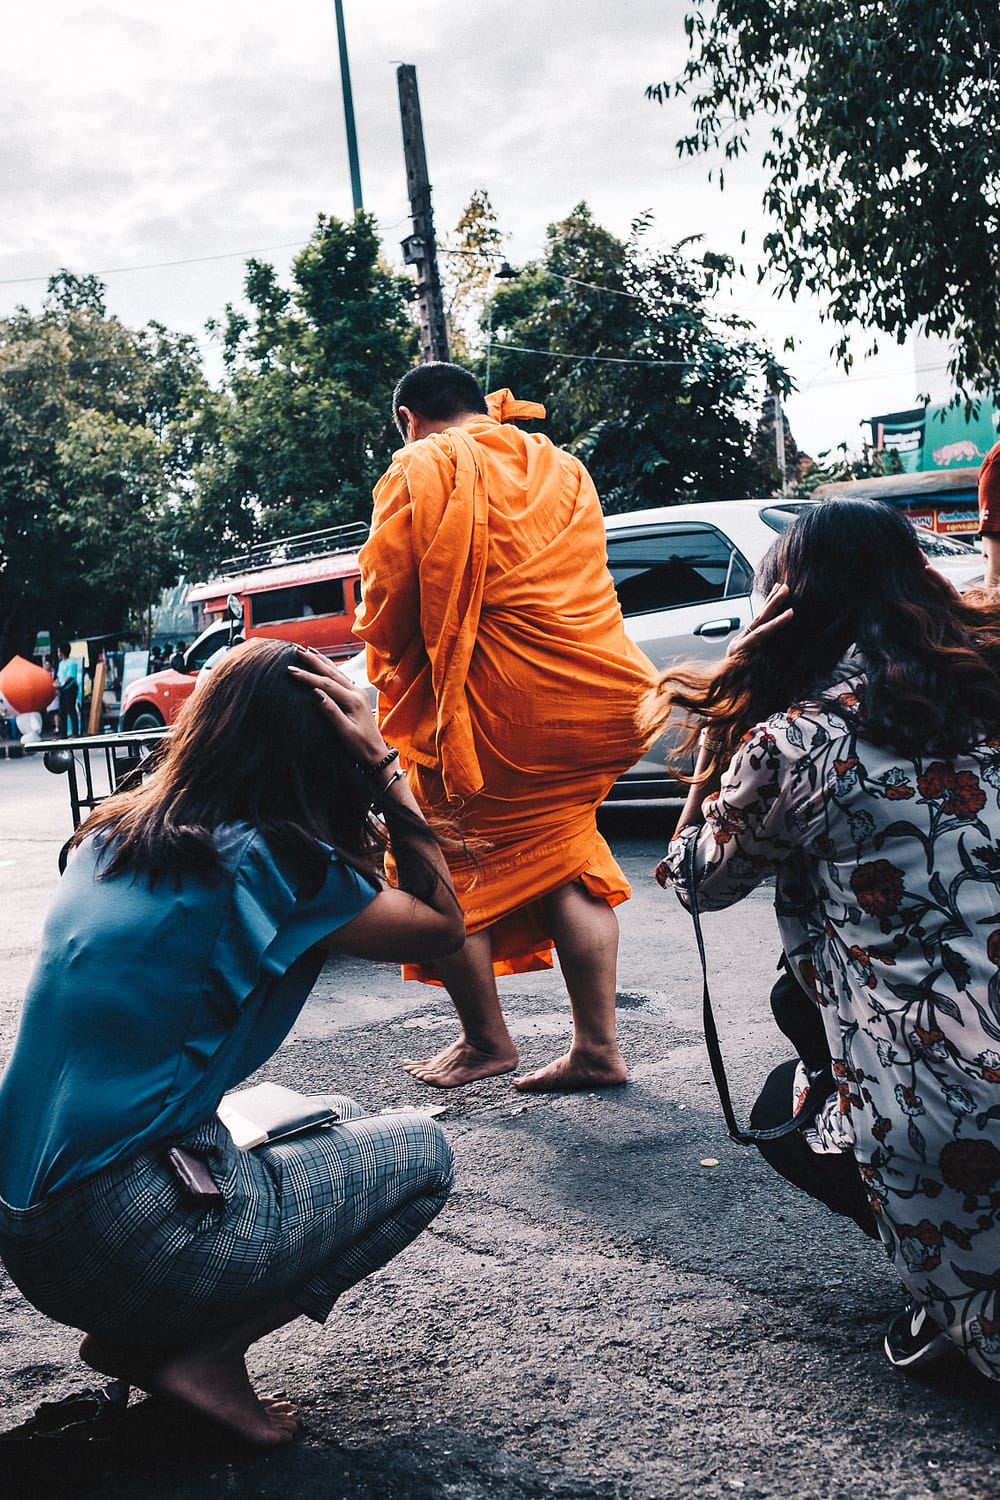 Chiang Mai, Thailand, October 2018